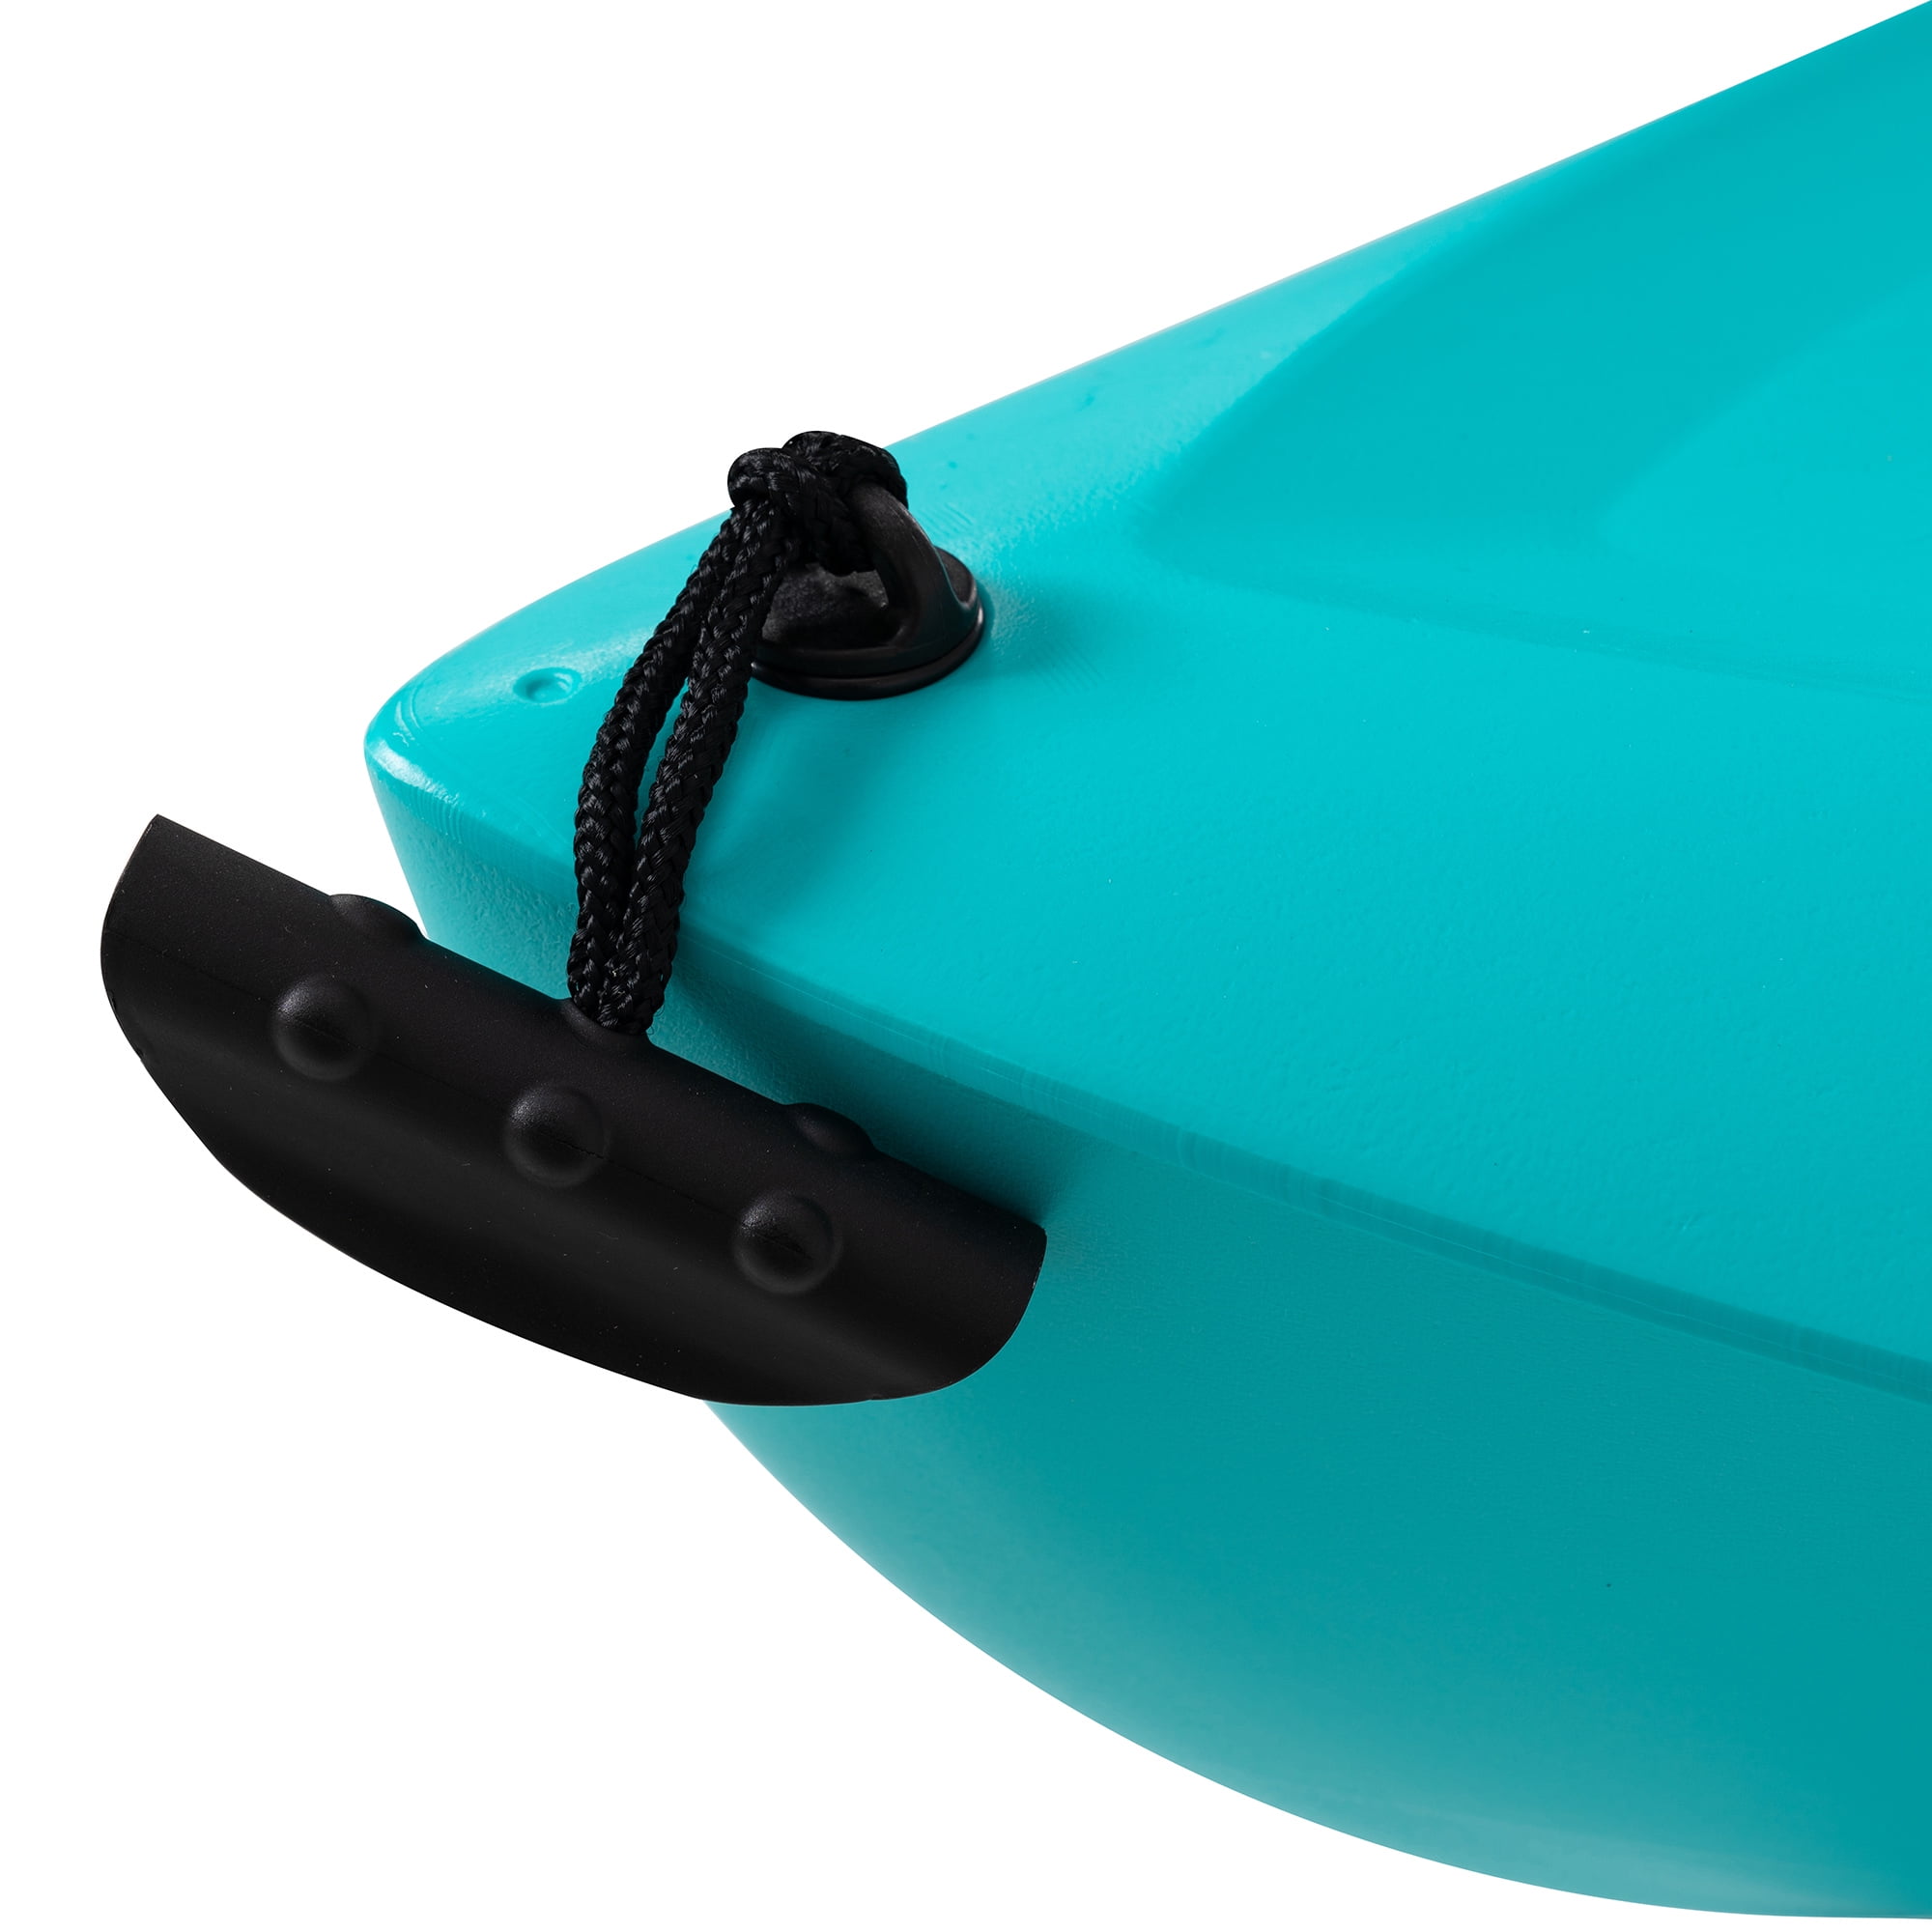 Lifetime Daylite 8 ft Sit-on-top Kayak (Paddle Included), Dark Blue